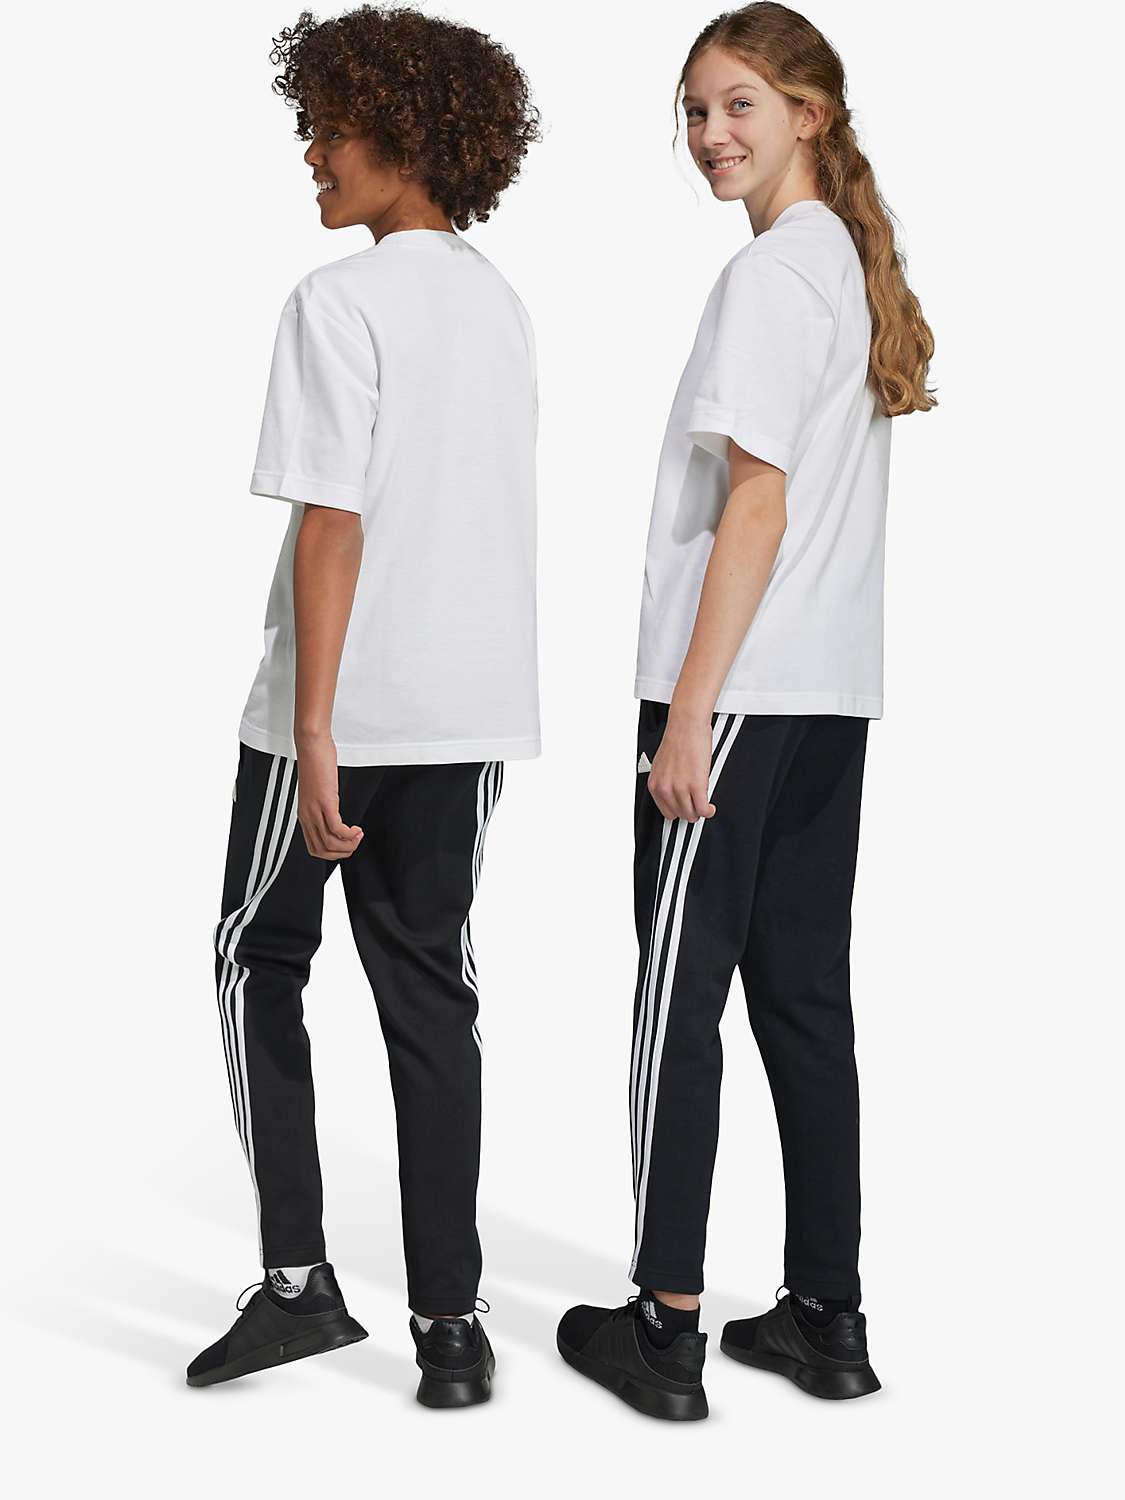 Buy adidas Kids' Future Icons 3 Stripes Joggers, Black/White Online at johnlewis.com